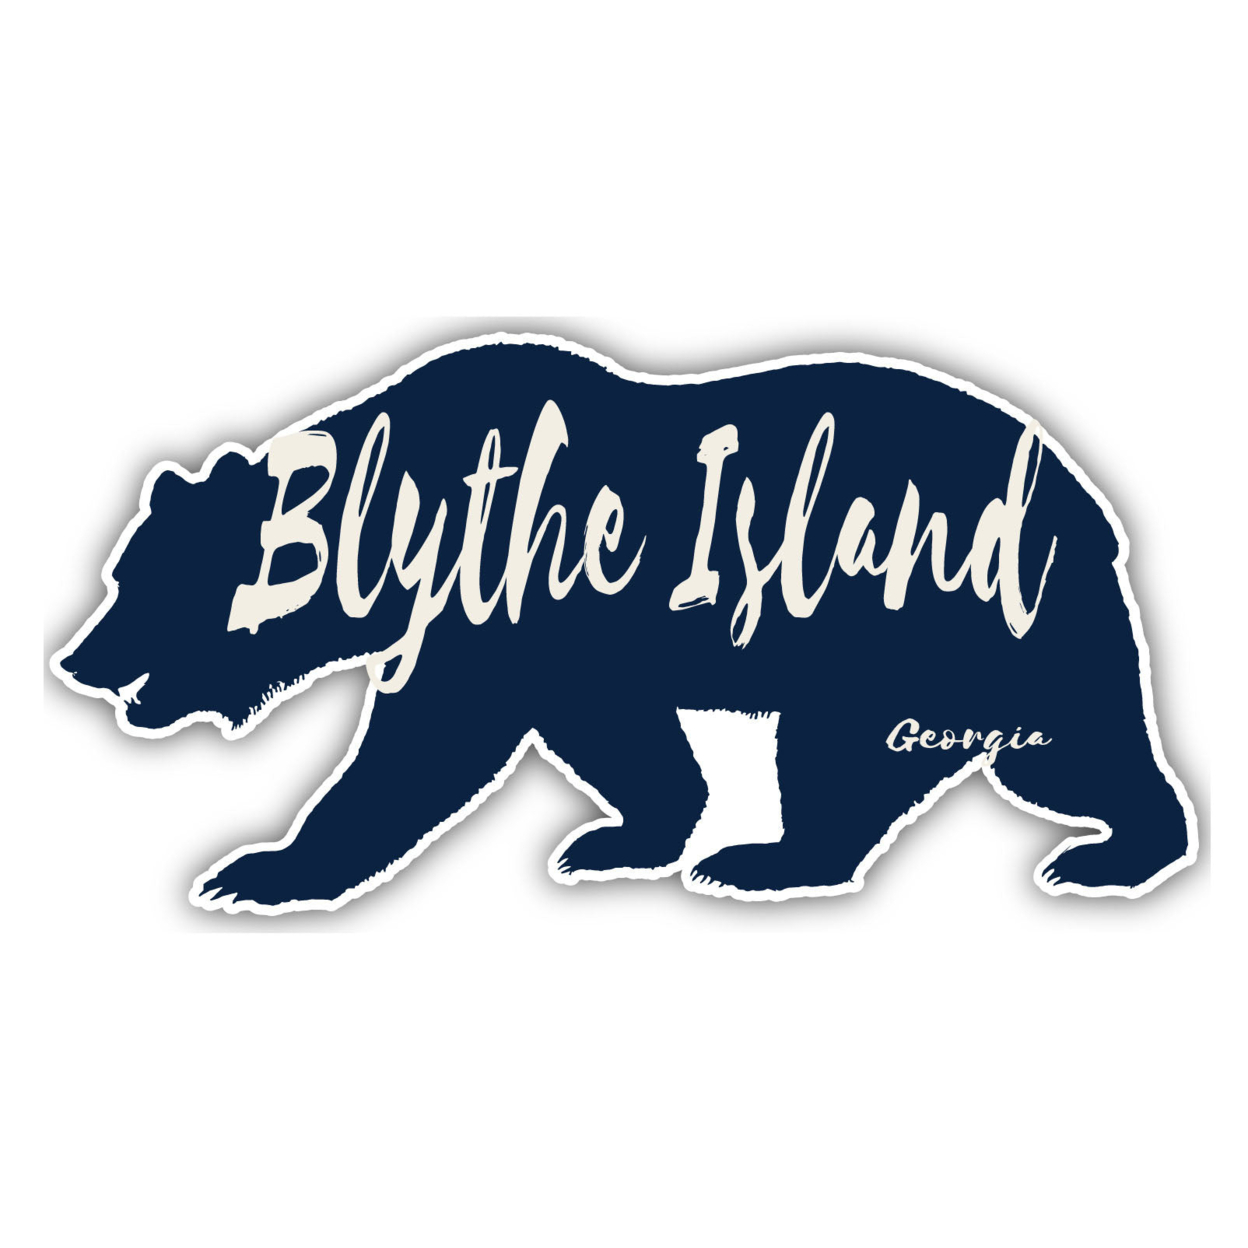 Blythe Island Georgia Souvenir Decorative Stickers (Choose Theme And Size) - Single Unit, 8-Inch, Bear